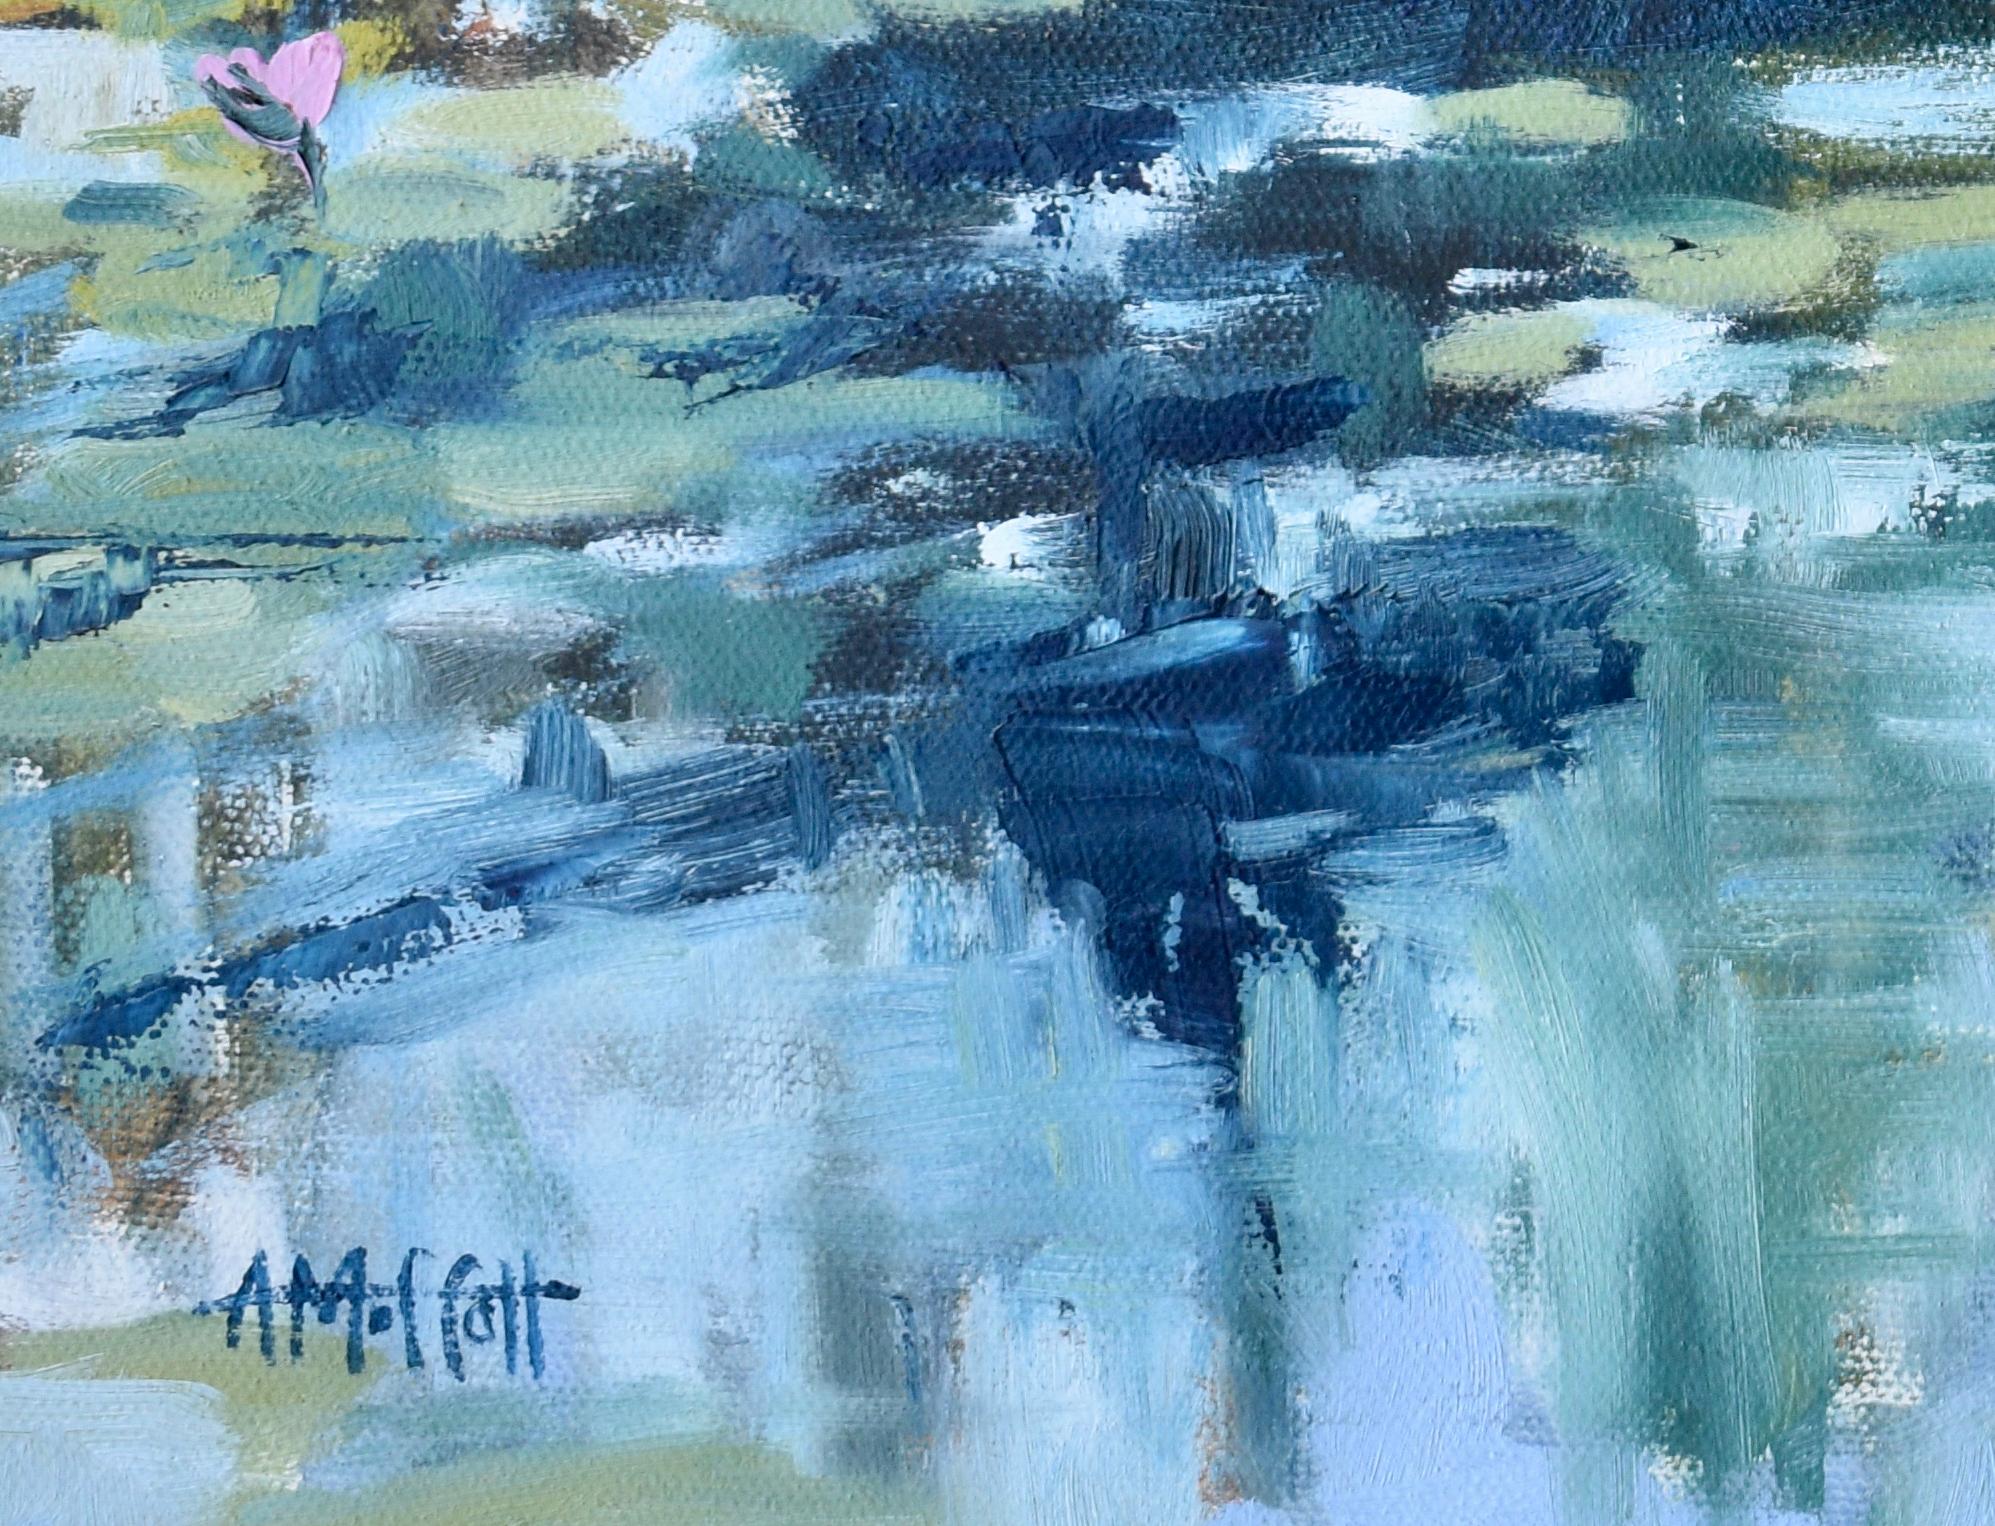 Lily Pond at Brookgreen Gardens, peinture originale de paysage impressionniste
11